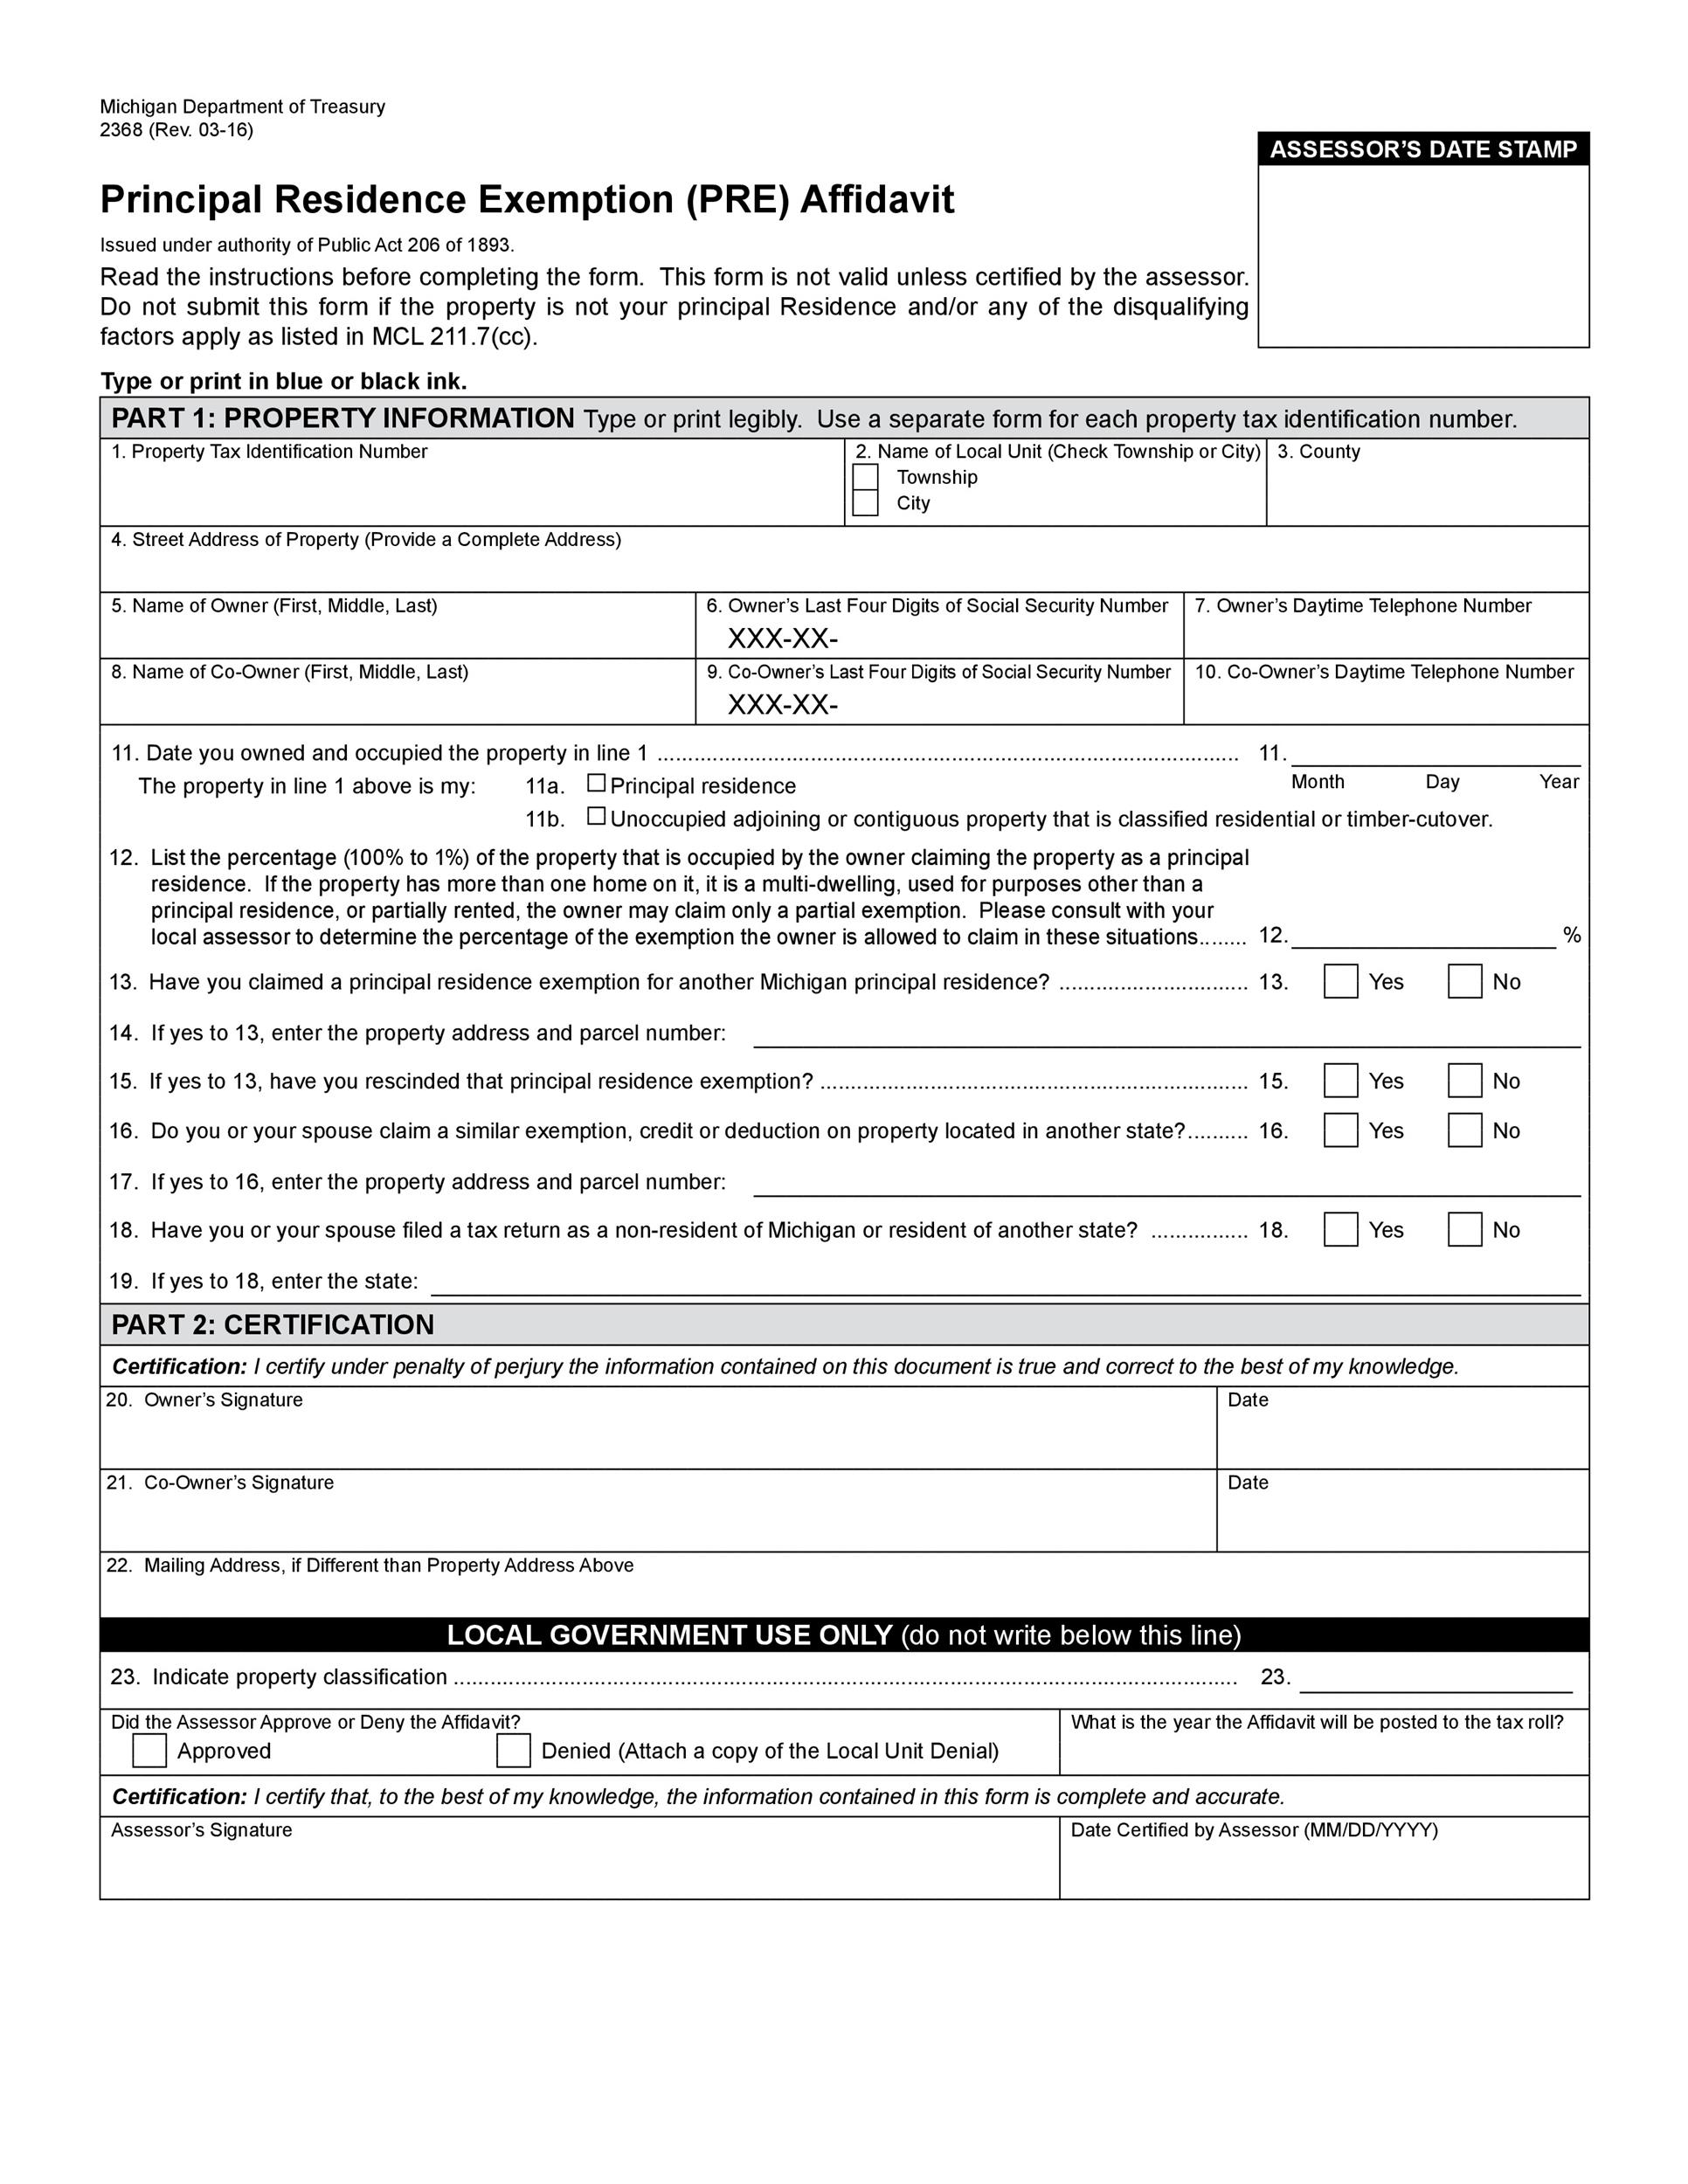 Free affidavit form 34